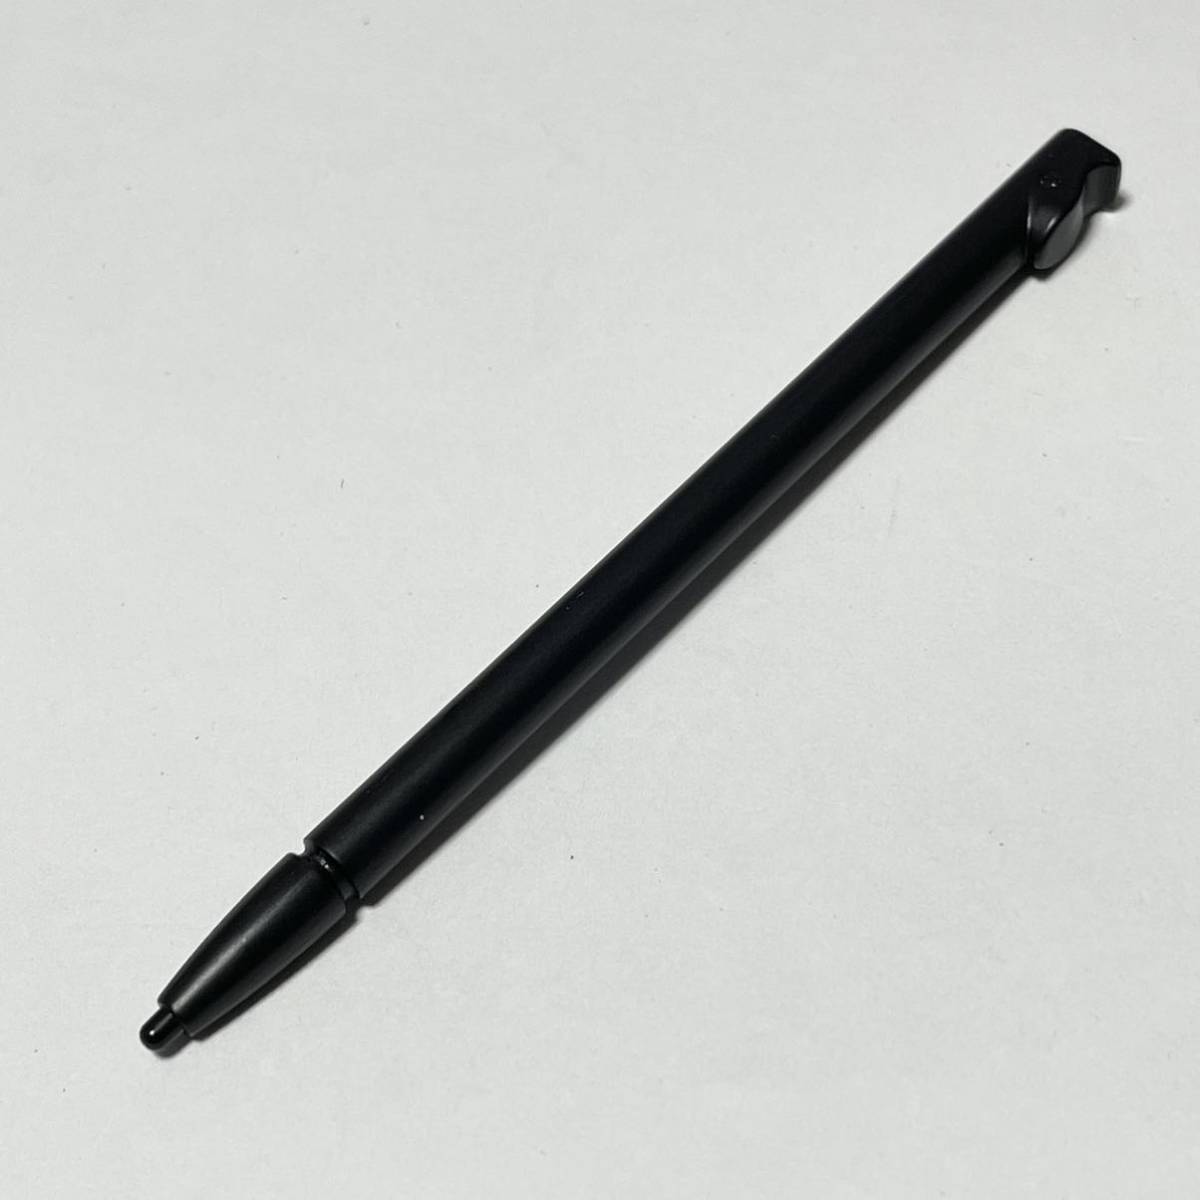 SHARP sharp original computerized dictionary for touch pen 1 pcs (PW-AC900/PW-AC910/PW-AC920/PW-GC590/PW-GC610/Brain/ stylus )